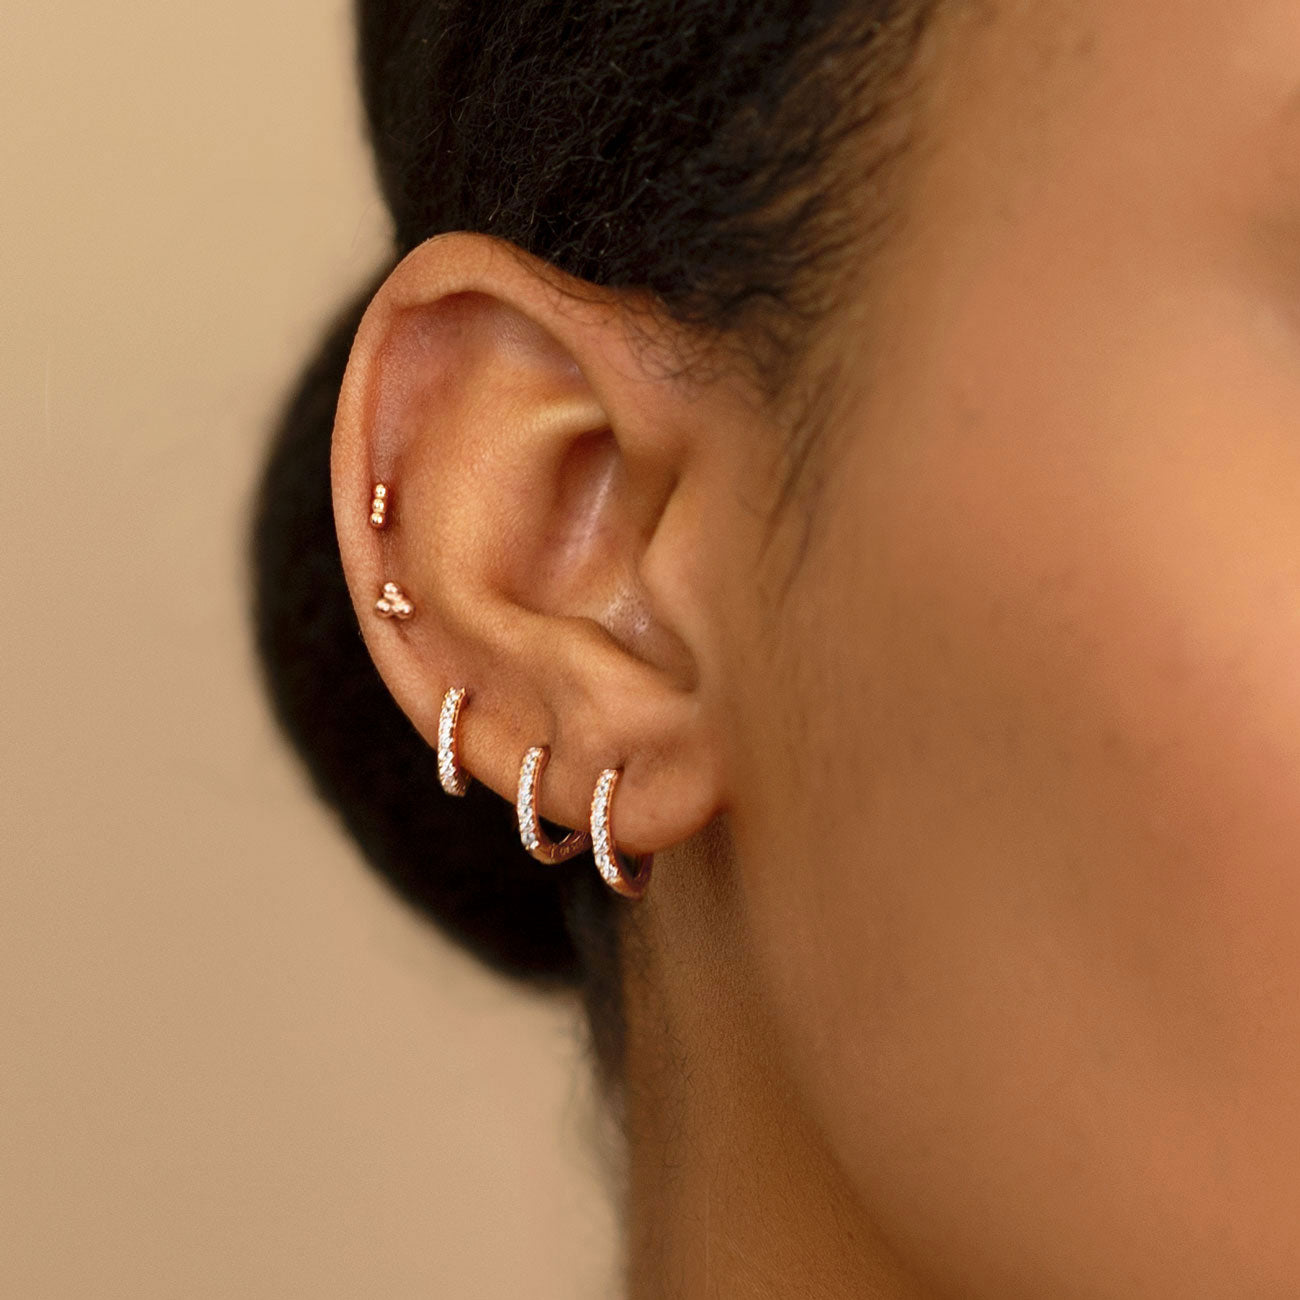 Tiny Trinity Ball Back Earrings in 14k Gold